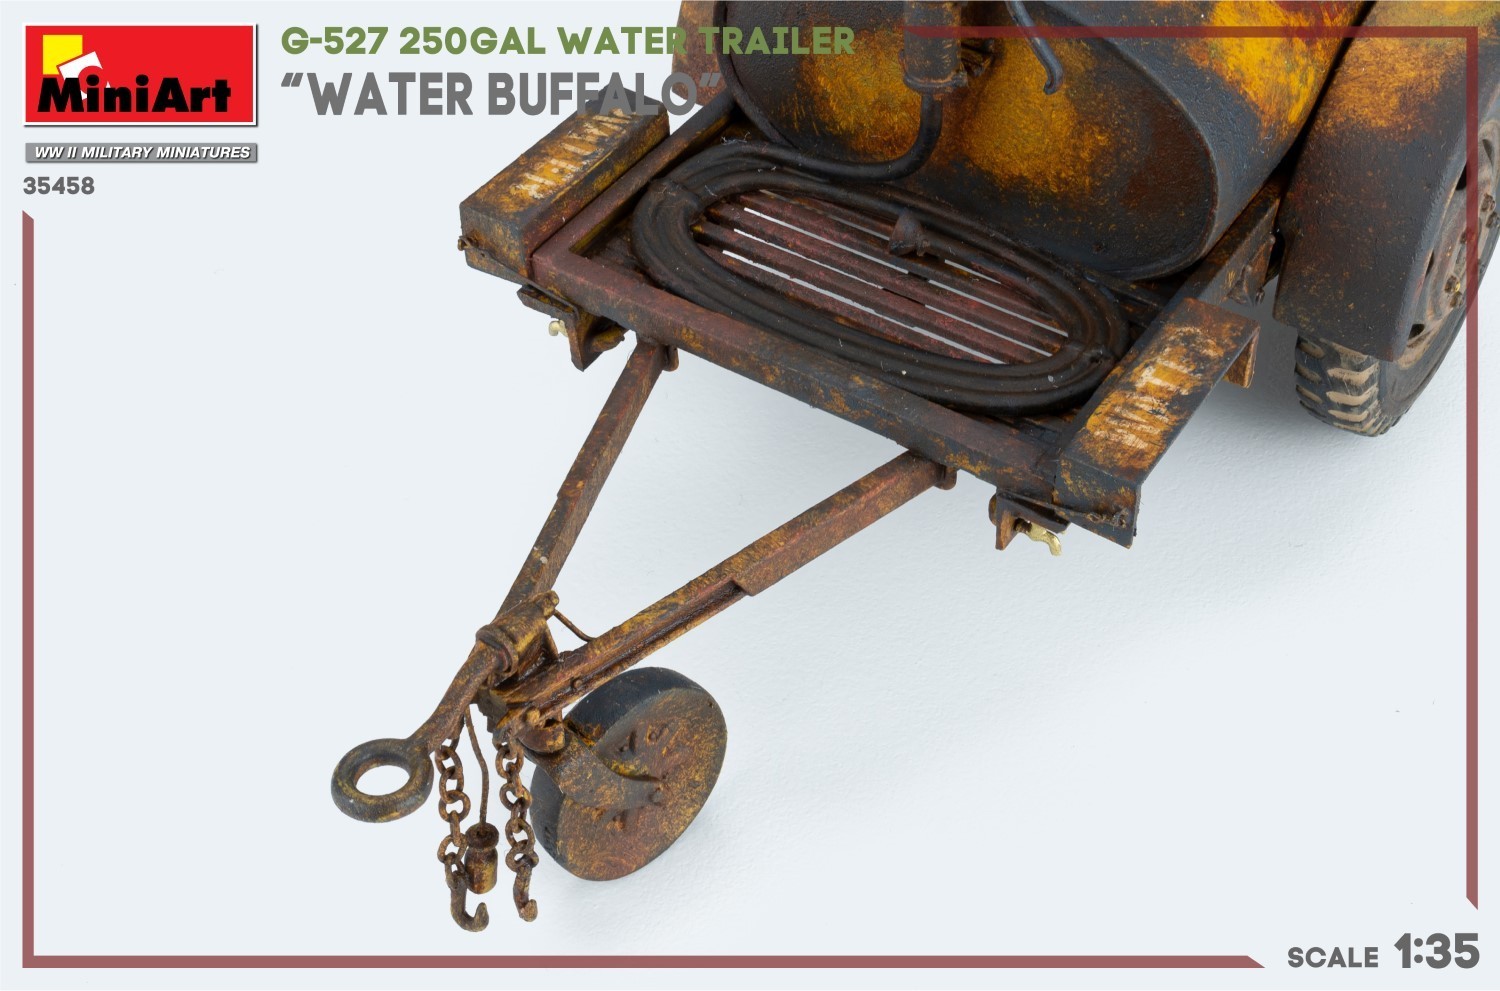 MiniArt G-527 250GAL Water Trailer “Water Buffalo” Rust Paint-9